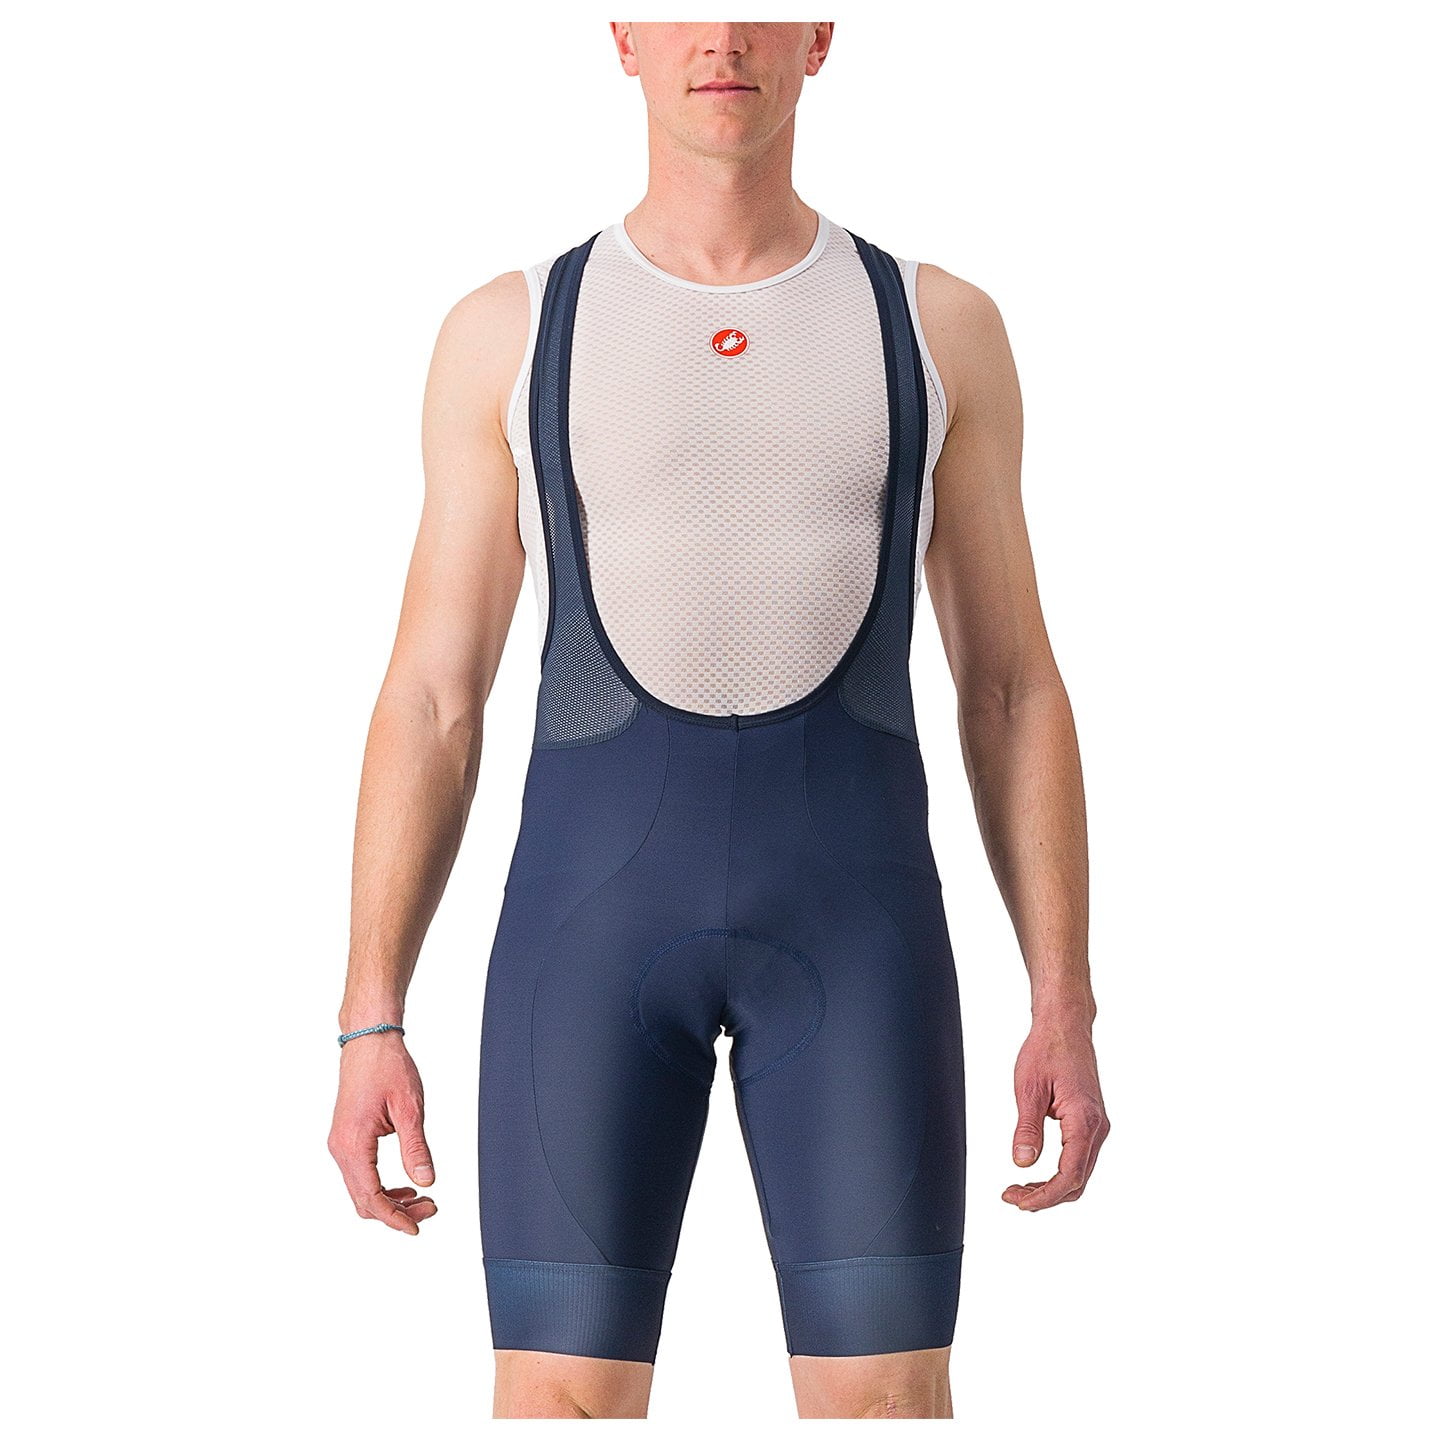 CASTELLI Entrata 2 Bib Shorts Bib Shorts, for men, size 2XL, Cycle shorts, Cycling clothing